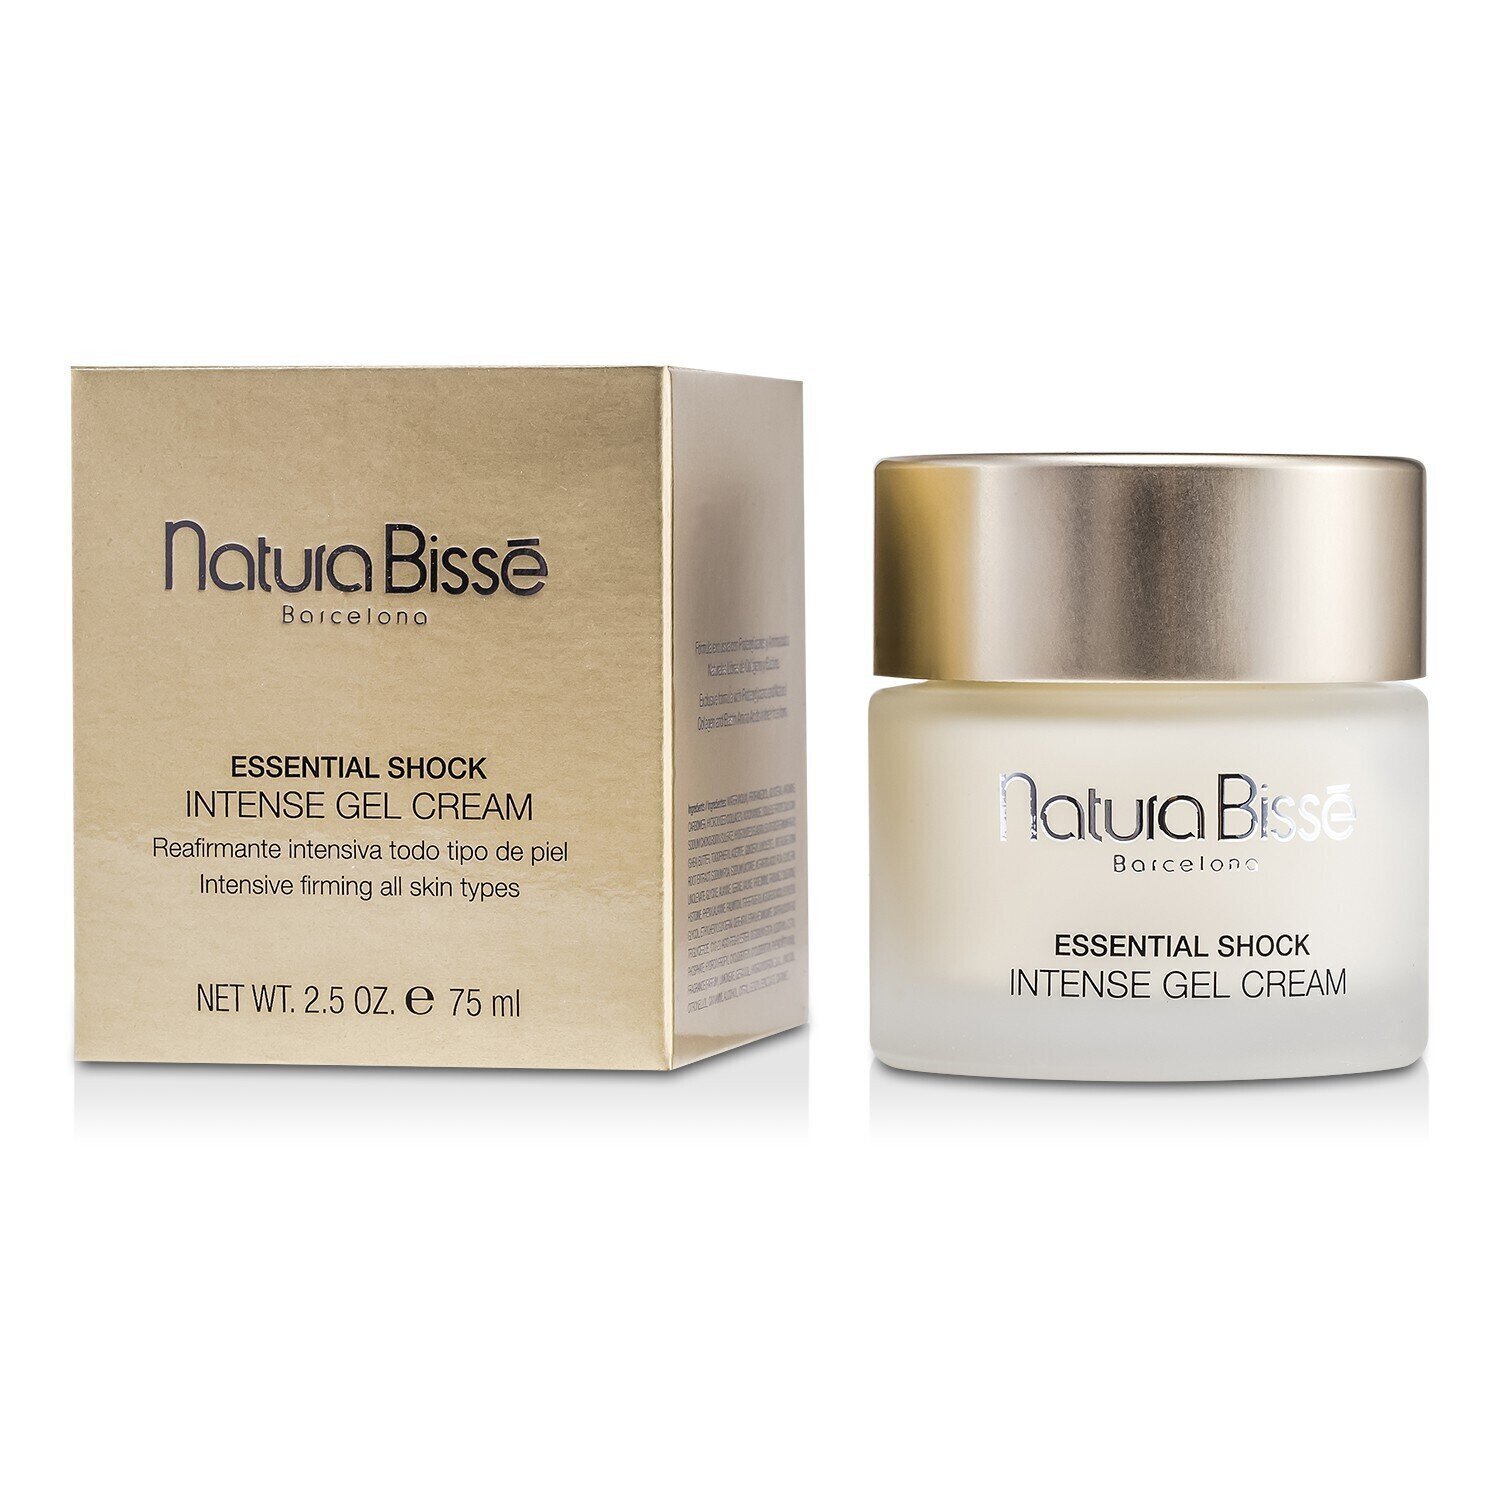 娜圖比索 Natura Bisse - 無齡緊膚滋潤凝膠乳霜Essential Shock Intense Gel Cream